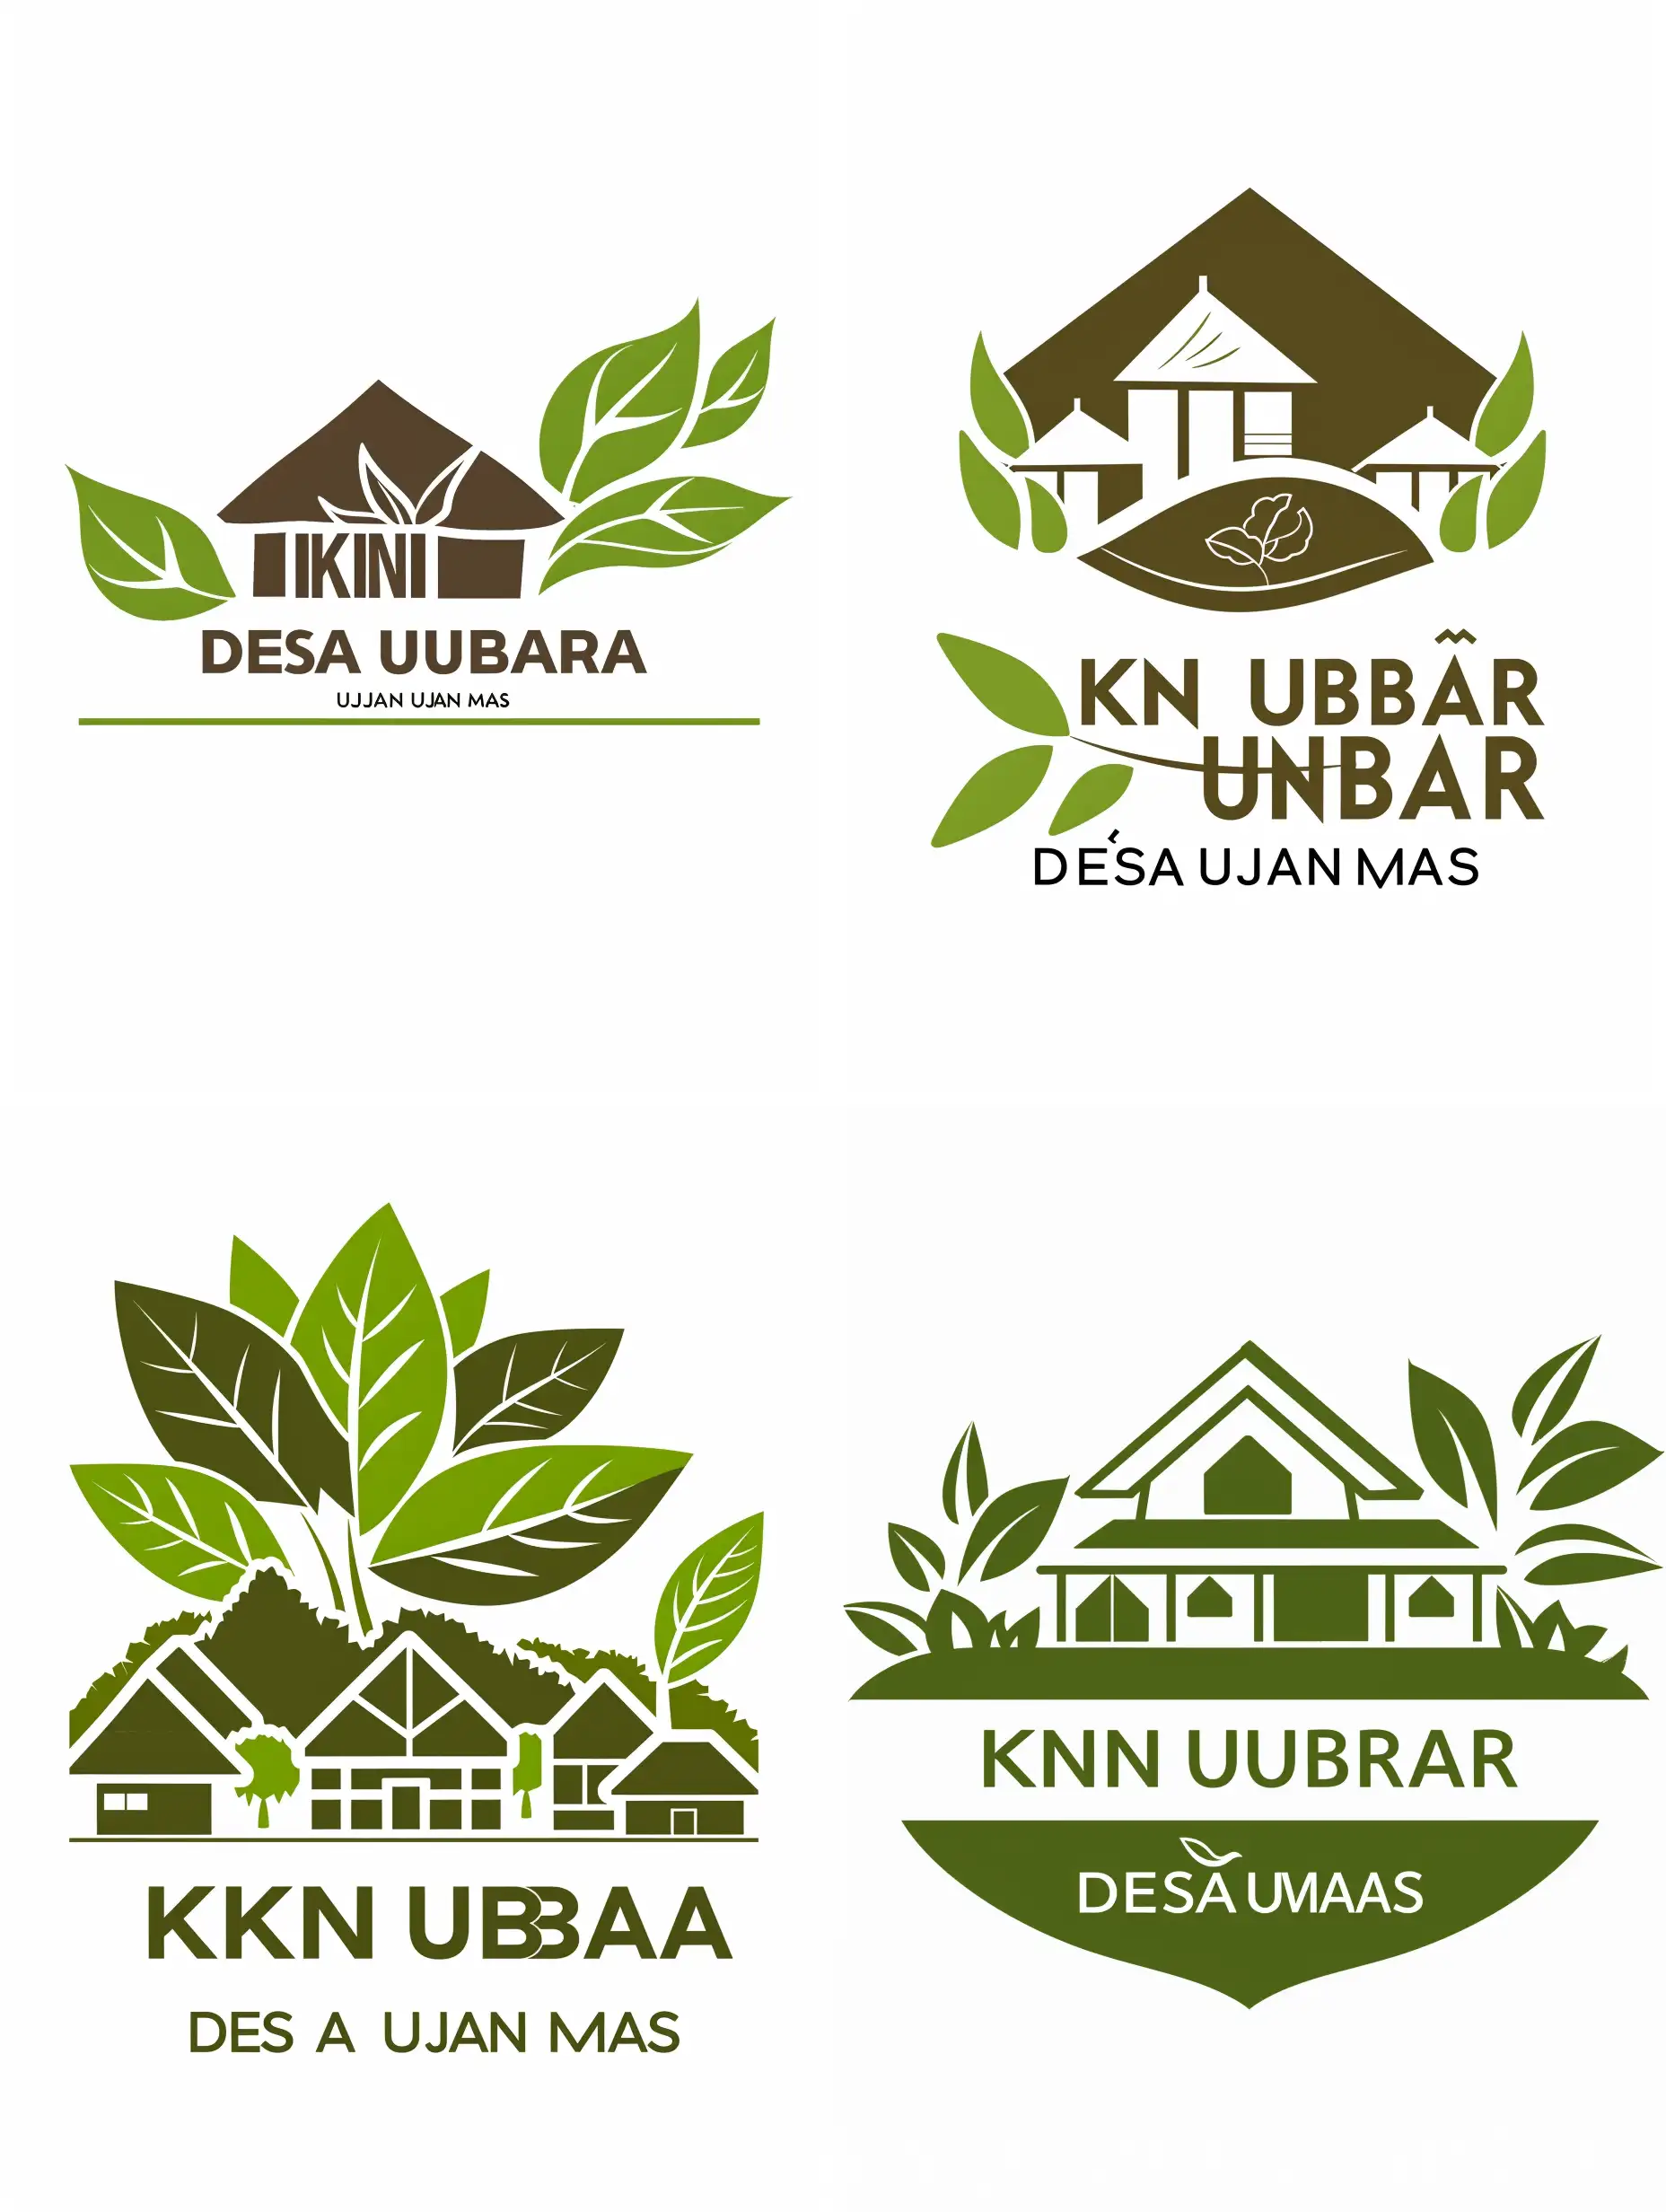 KKN-UNBARA-Logo-with-Village-and-Leaves-Displaying-the-Slogan-DESA-UJAN-MAS